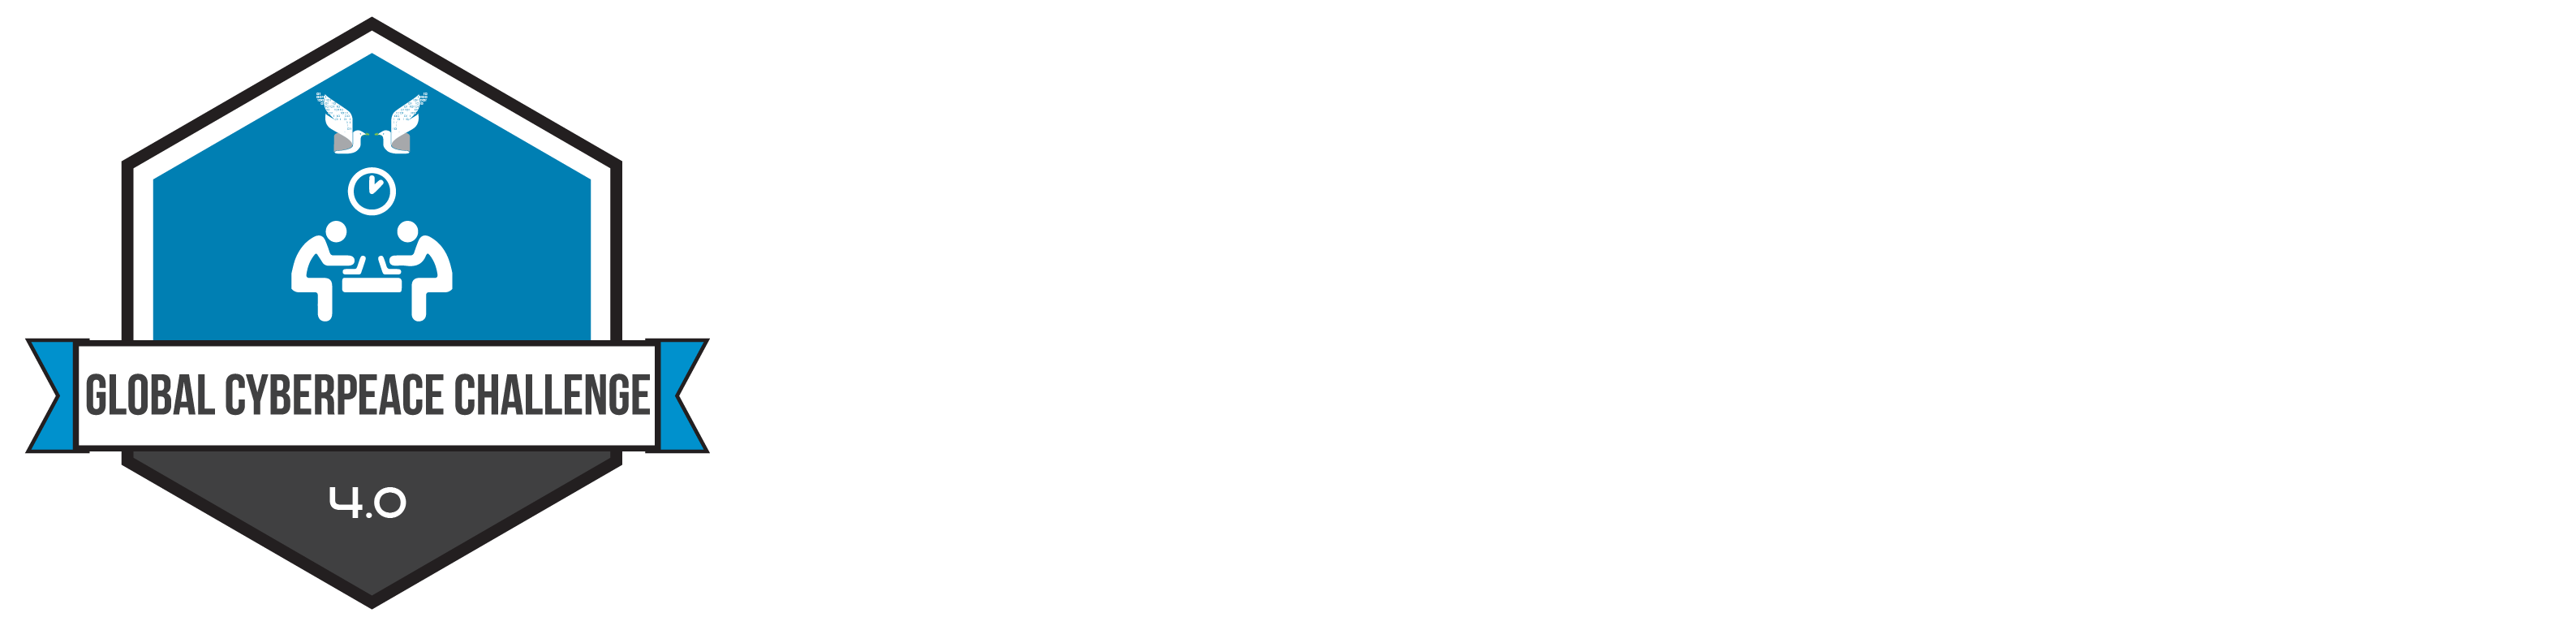 GCC 4.0 – Global CyberPeace Challenge